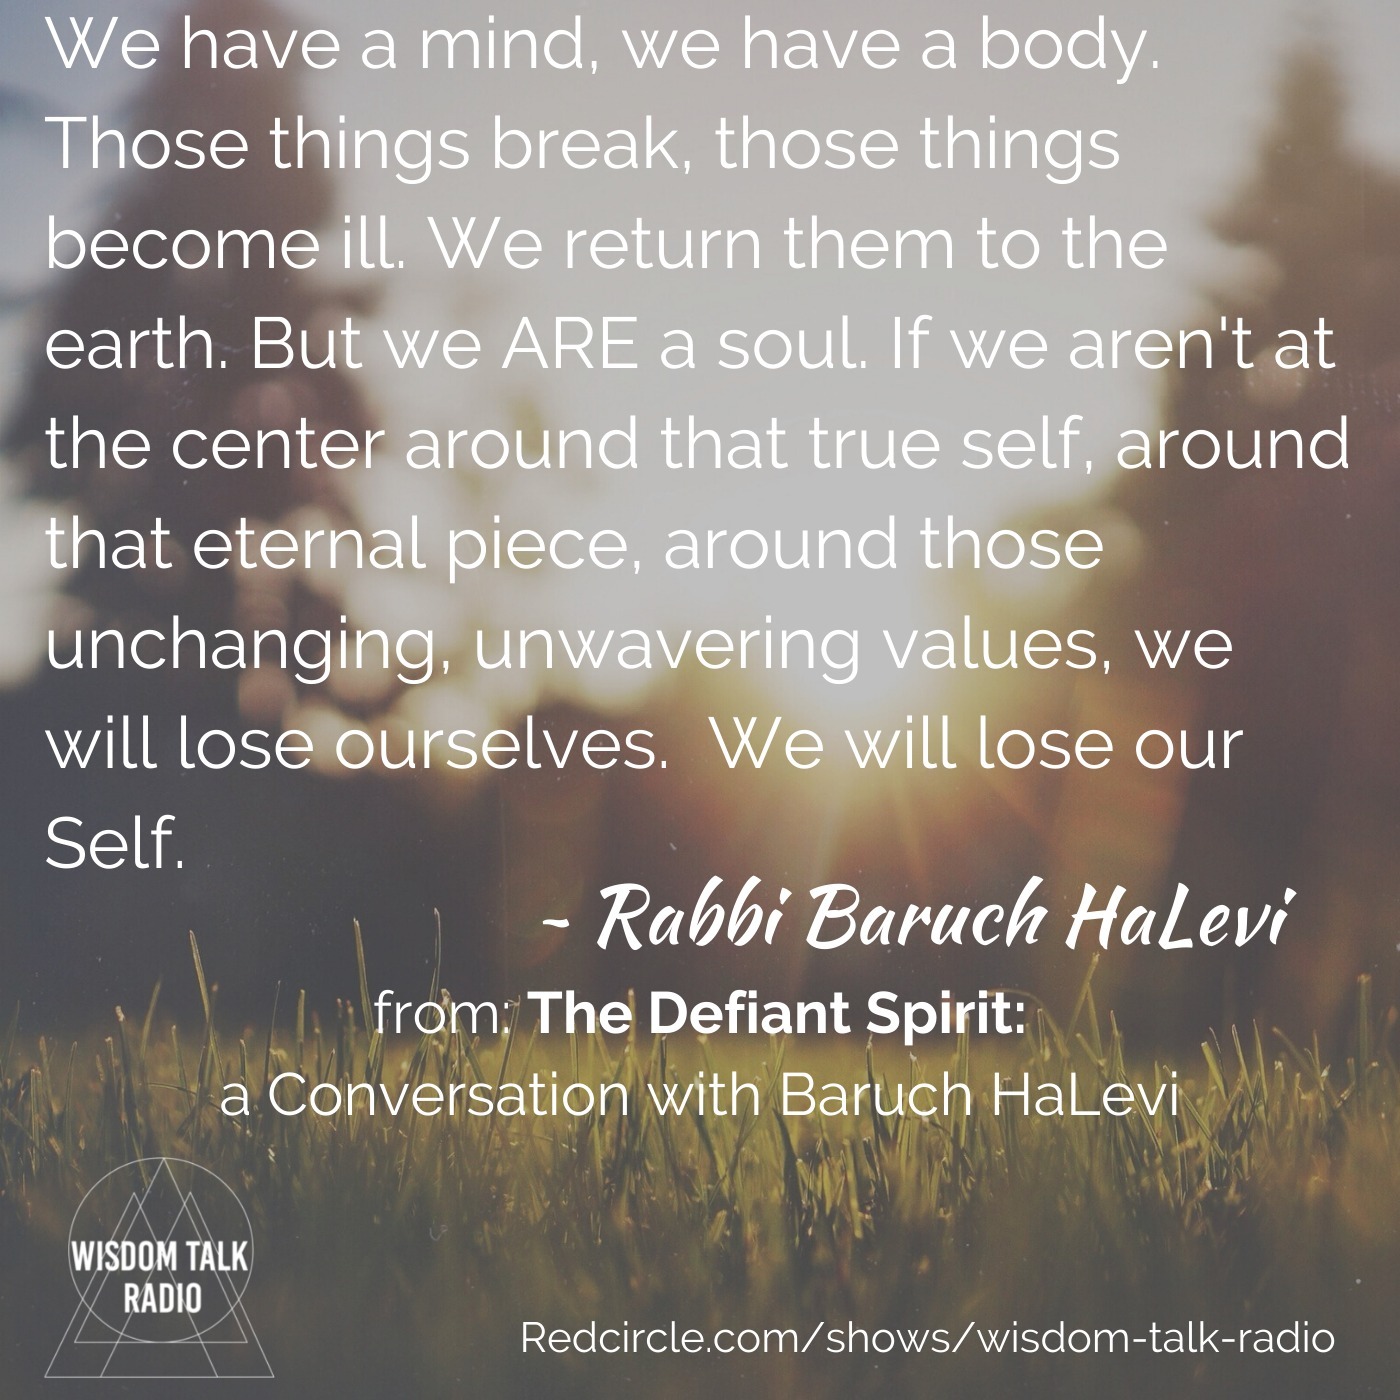 The Defiant Spirit: a conversation with Rabbi Baruch HaLevi